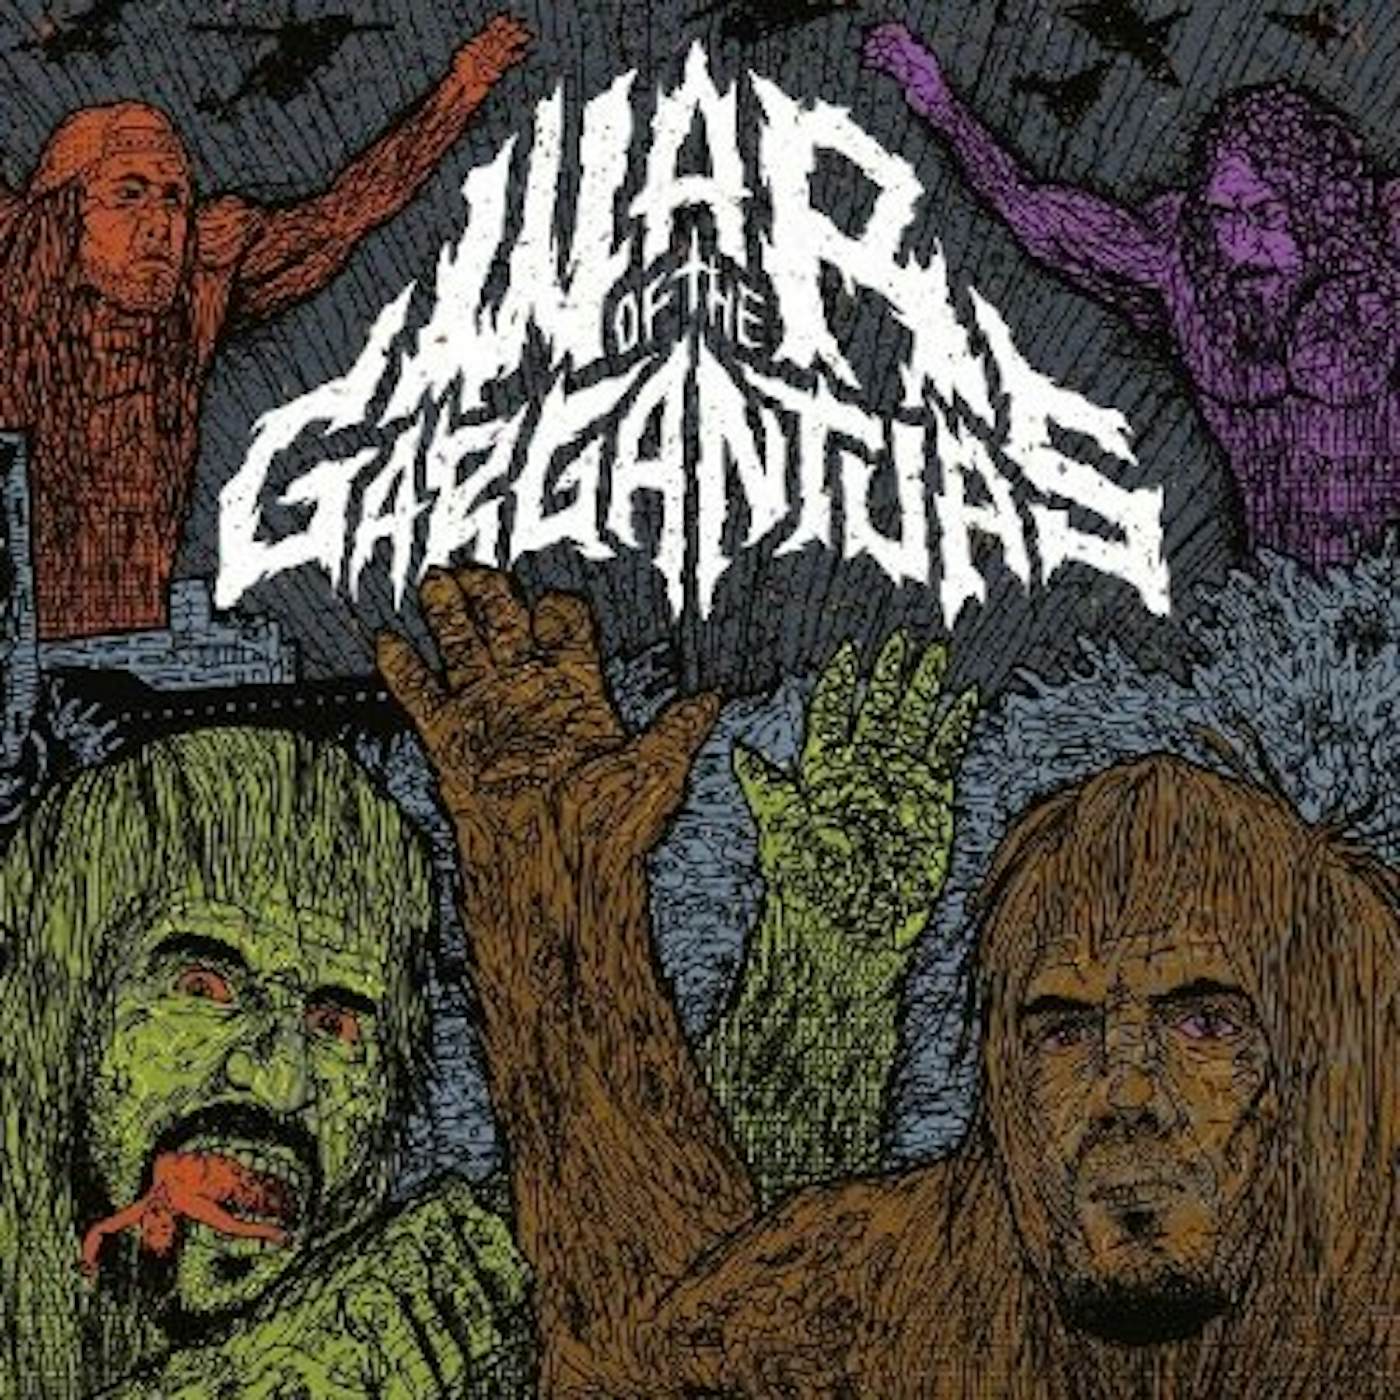 Philip H. Anselmo & Warbeast WAR OF THE GARGANTUAS CD